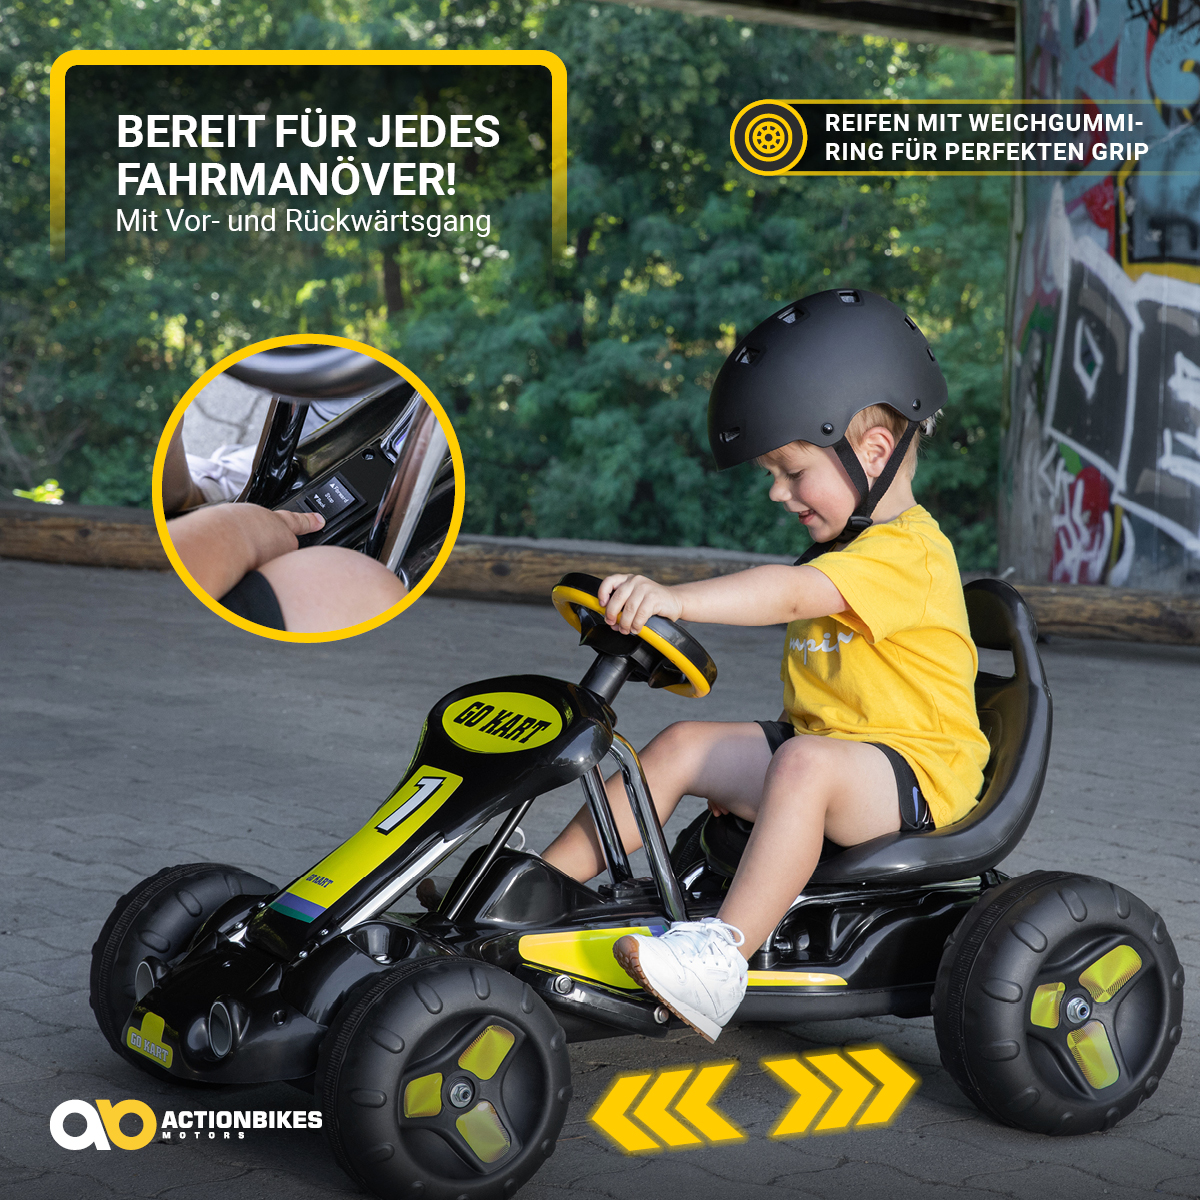 9788 ACTIONBIKES MOTORS Kinder-Elektro-Go-Kart Go-Kart